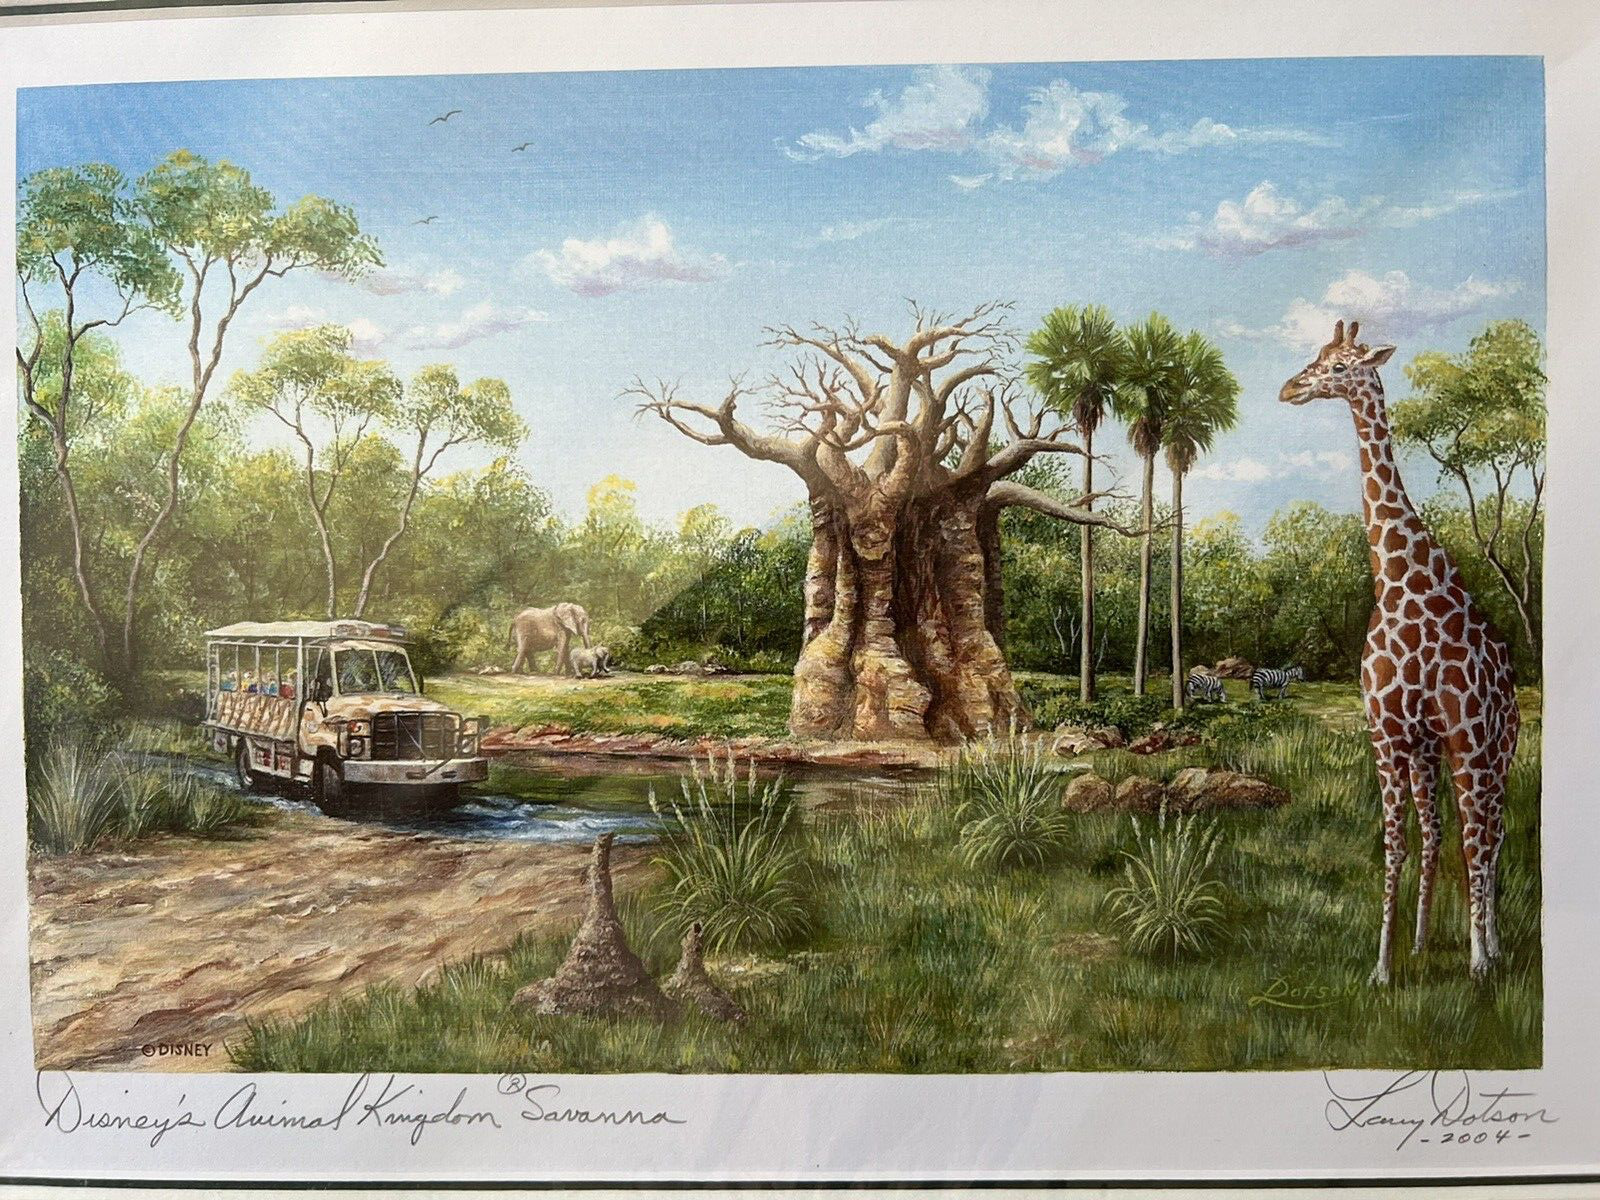 Disneyworld Animal Kingdom Savanna view- Larry Dotson Print 11” x 14” NEW-sealed